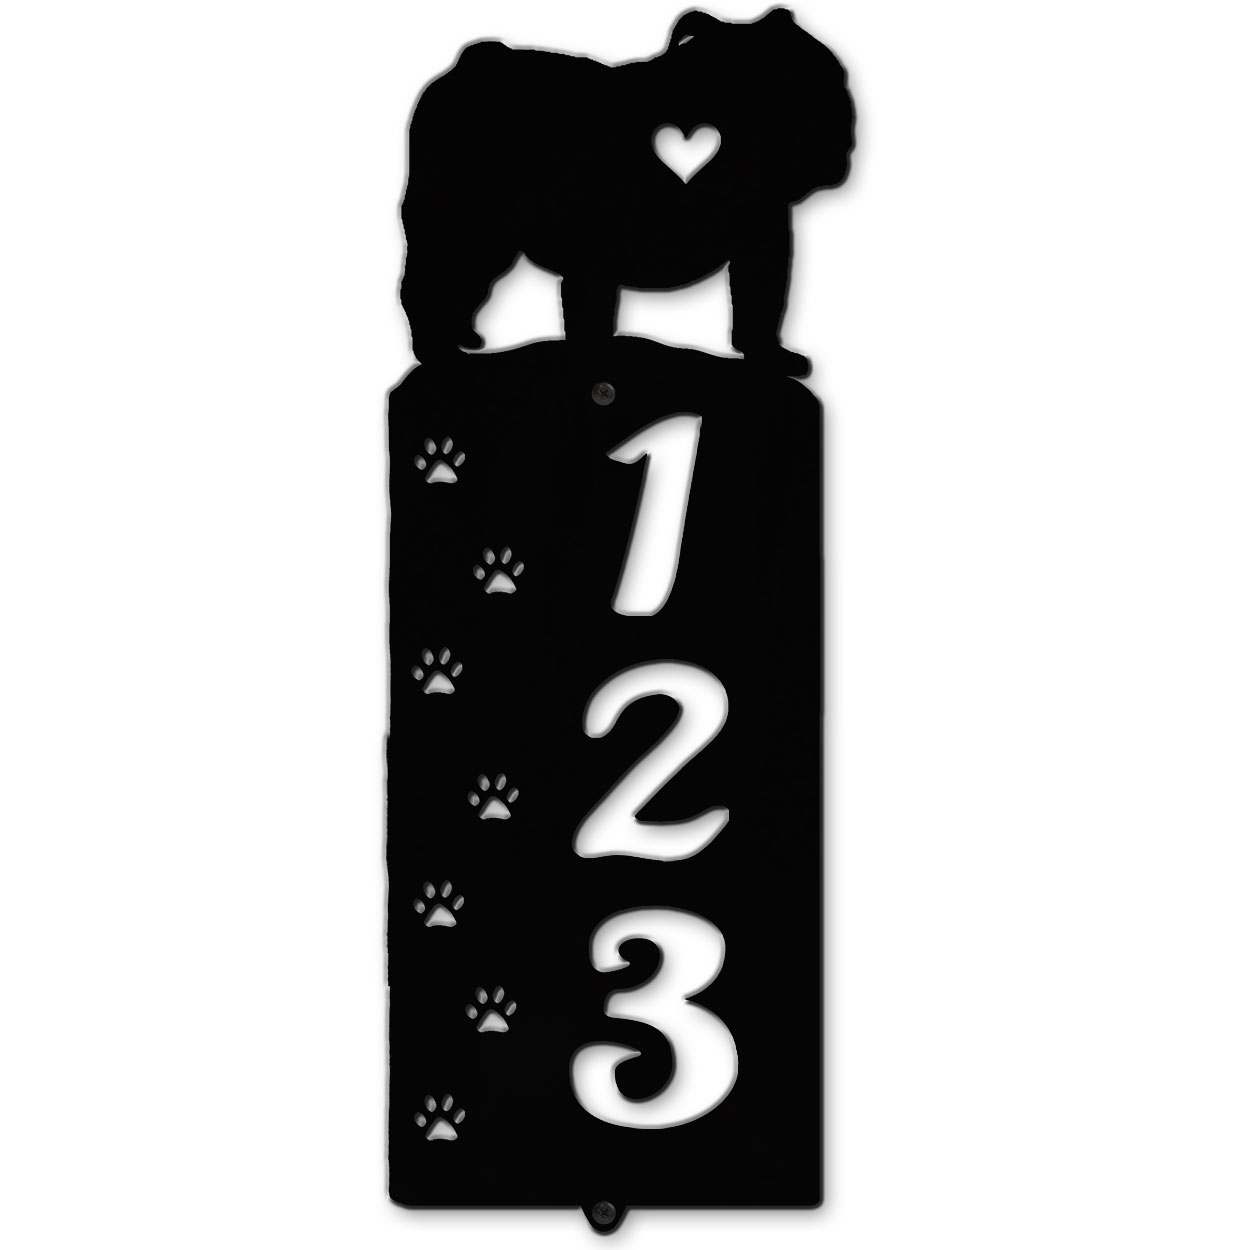 636203 - English Bulldog Cut Outs Three Digit Address Number Plaque